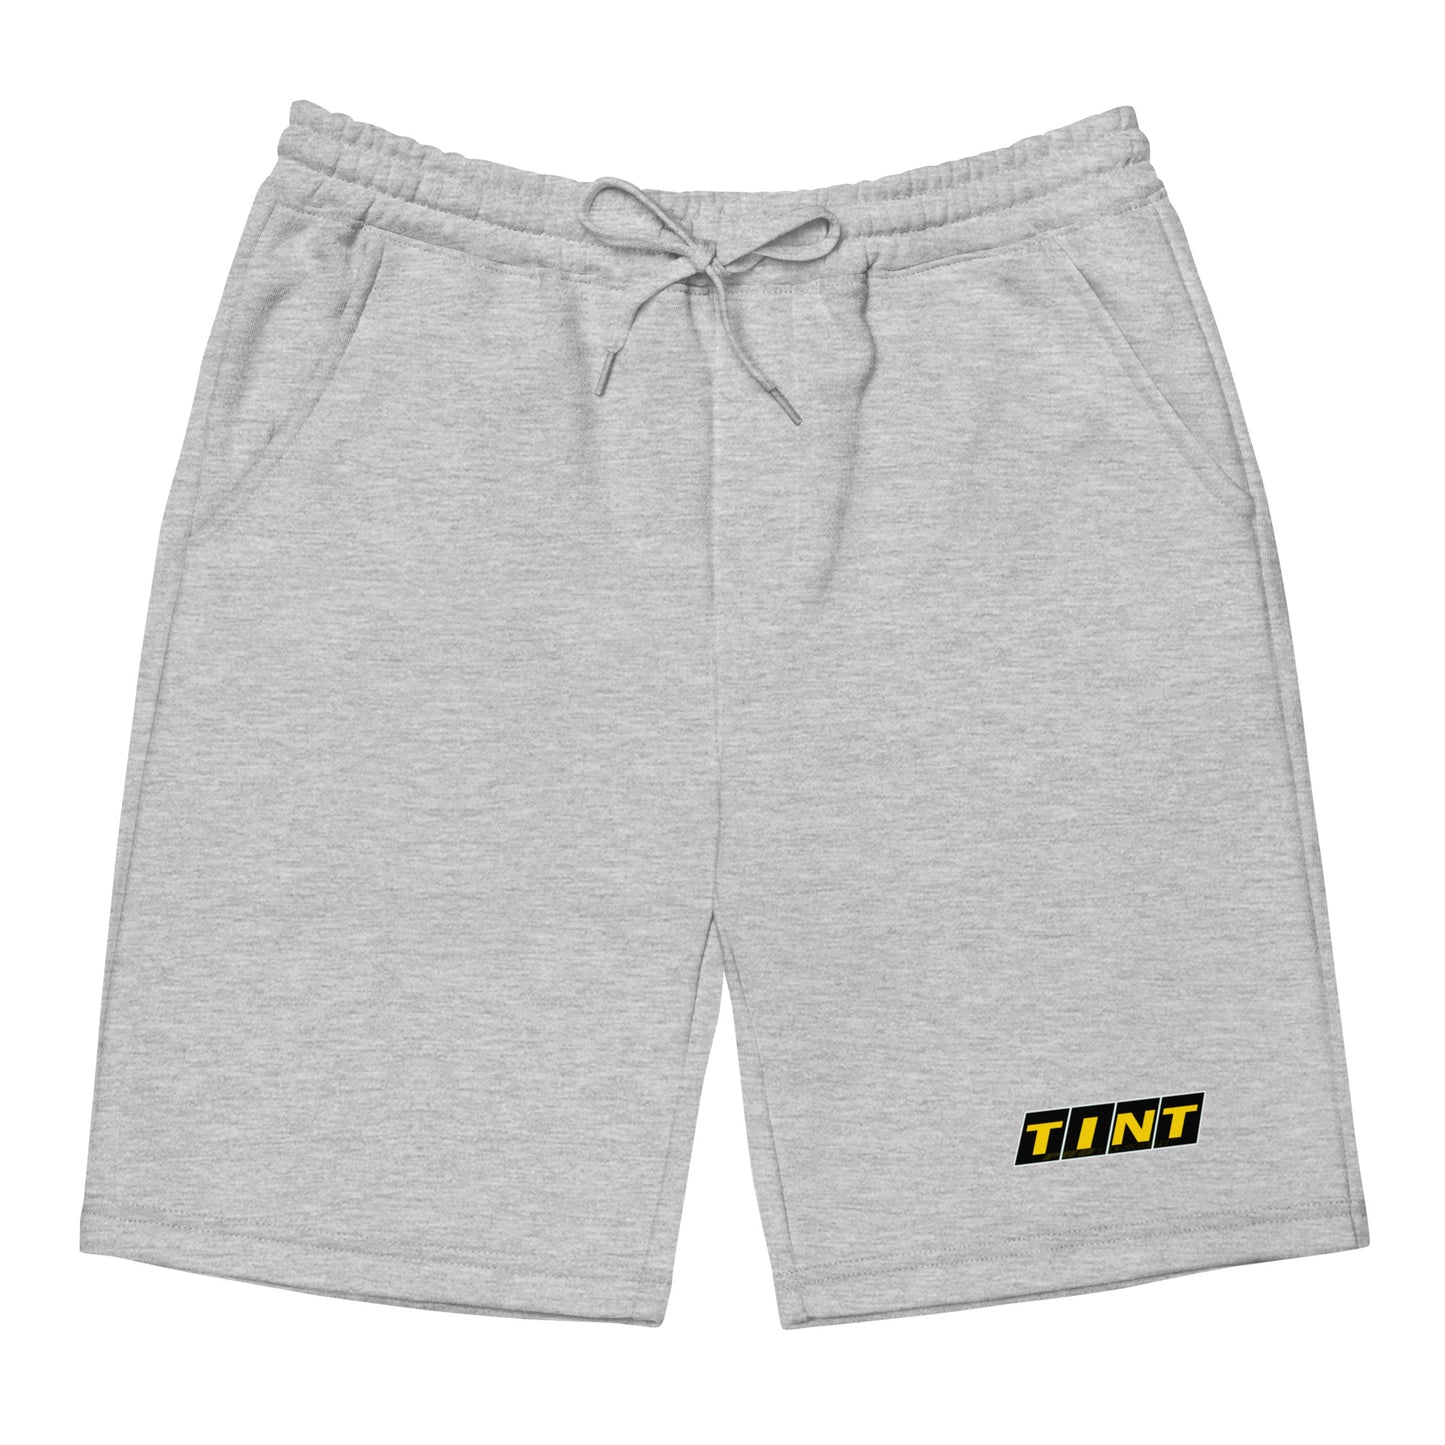 TINT by Pro Tinter Men's fleece shorts